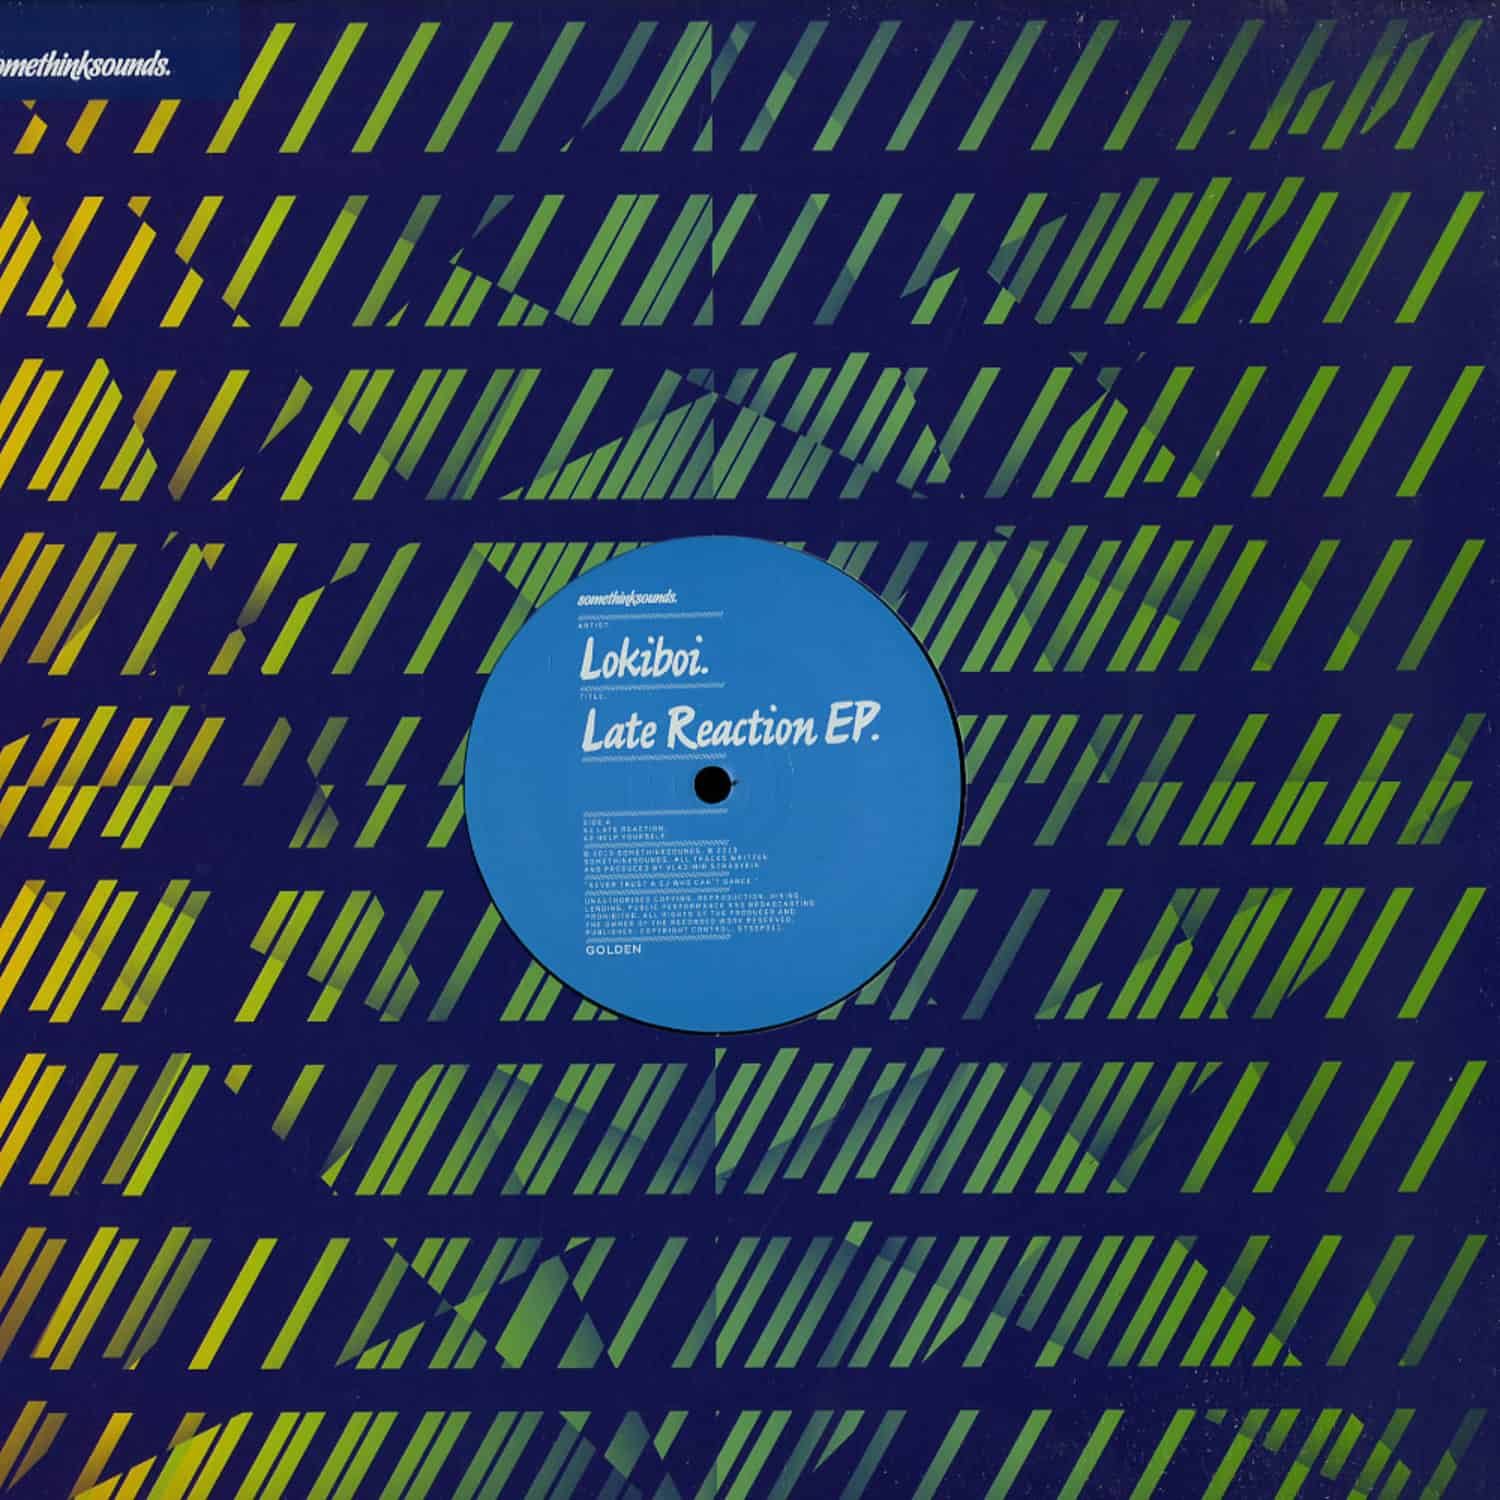 Lokiboi - LATE REACTION EP